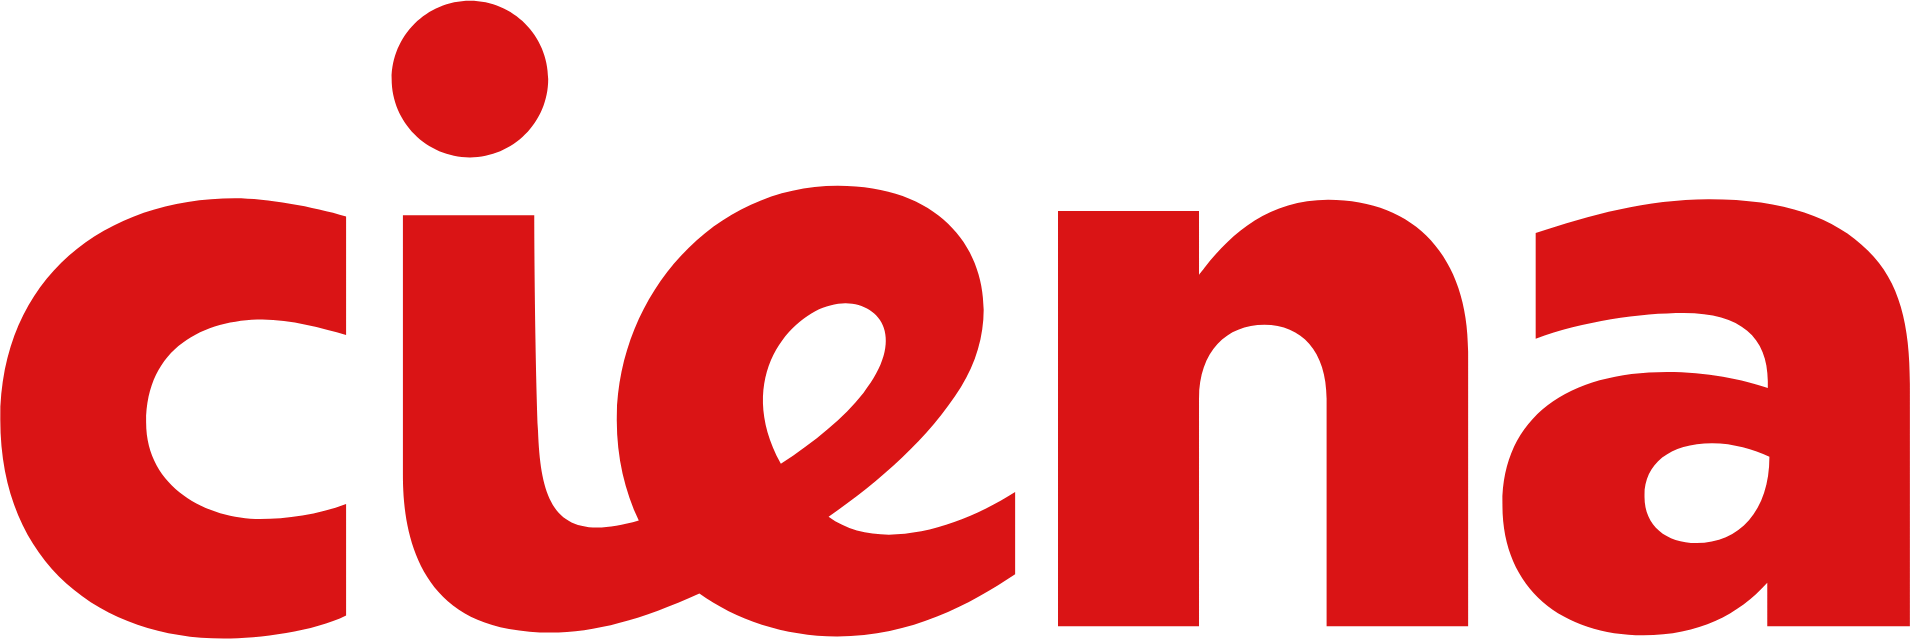 Ciena logo (transparent PNG)